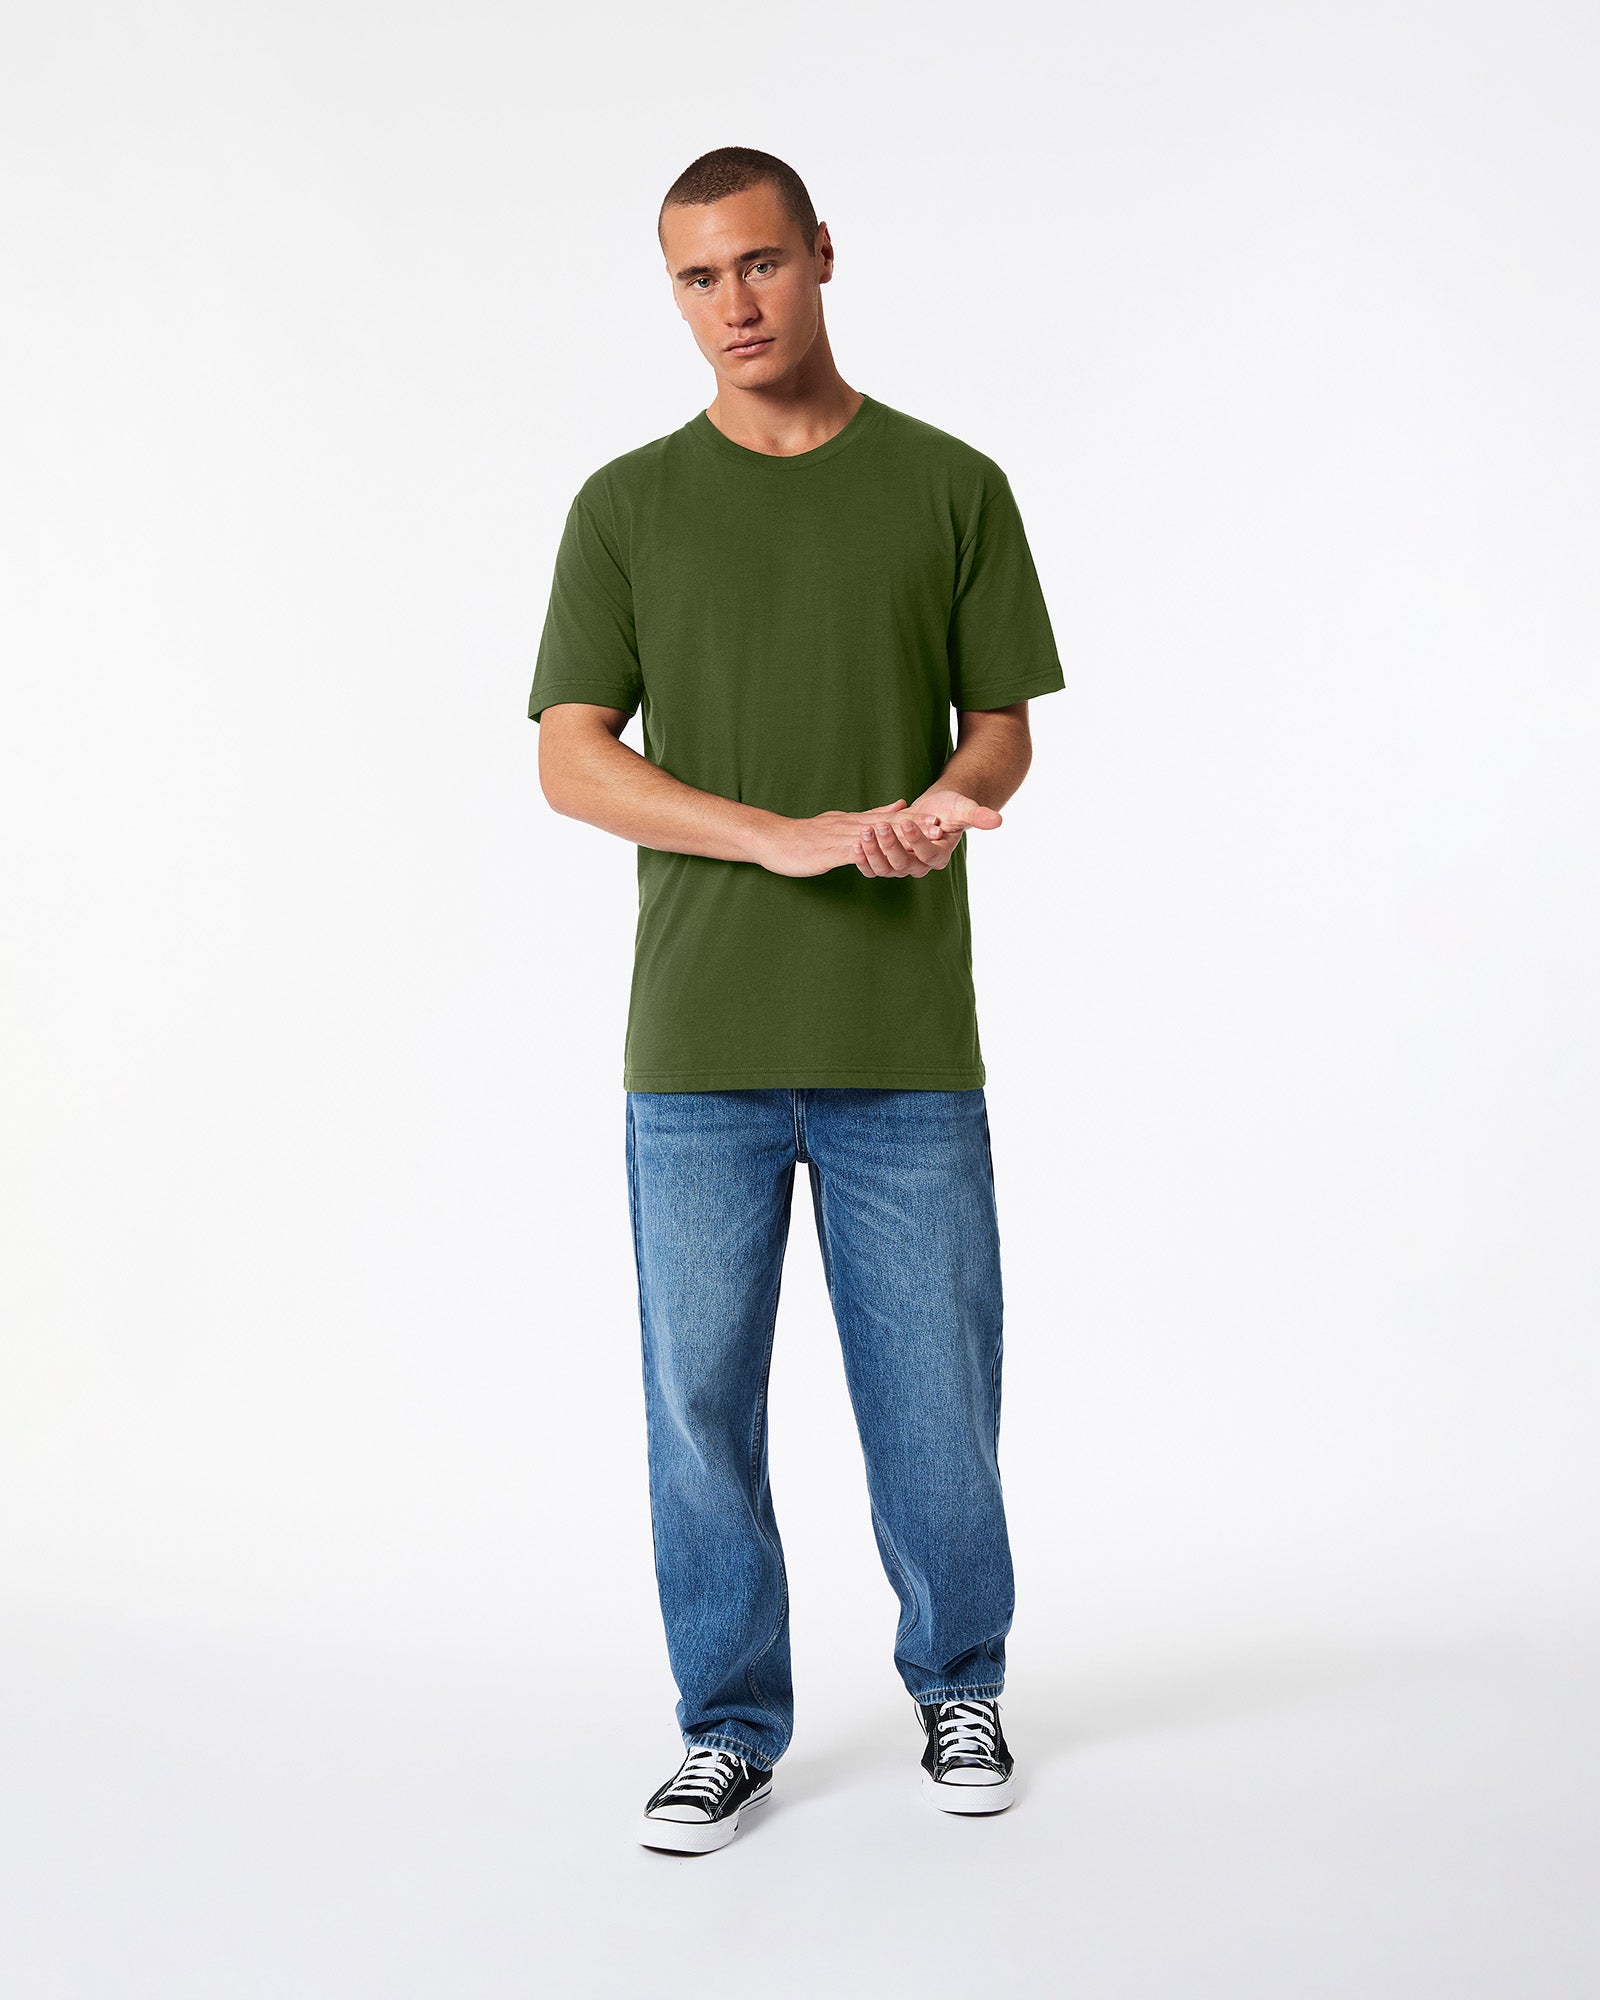 Fine Jersey Unisex Short Sleeve T-Shirt - Olive